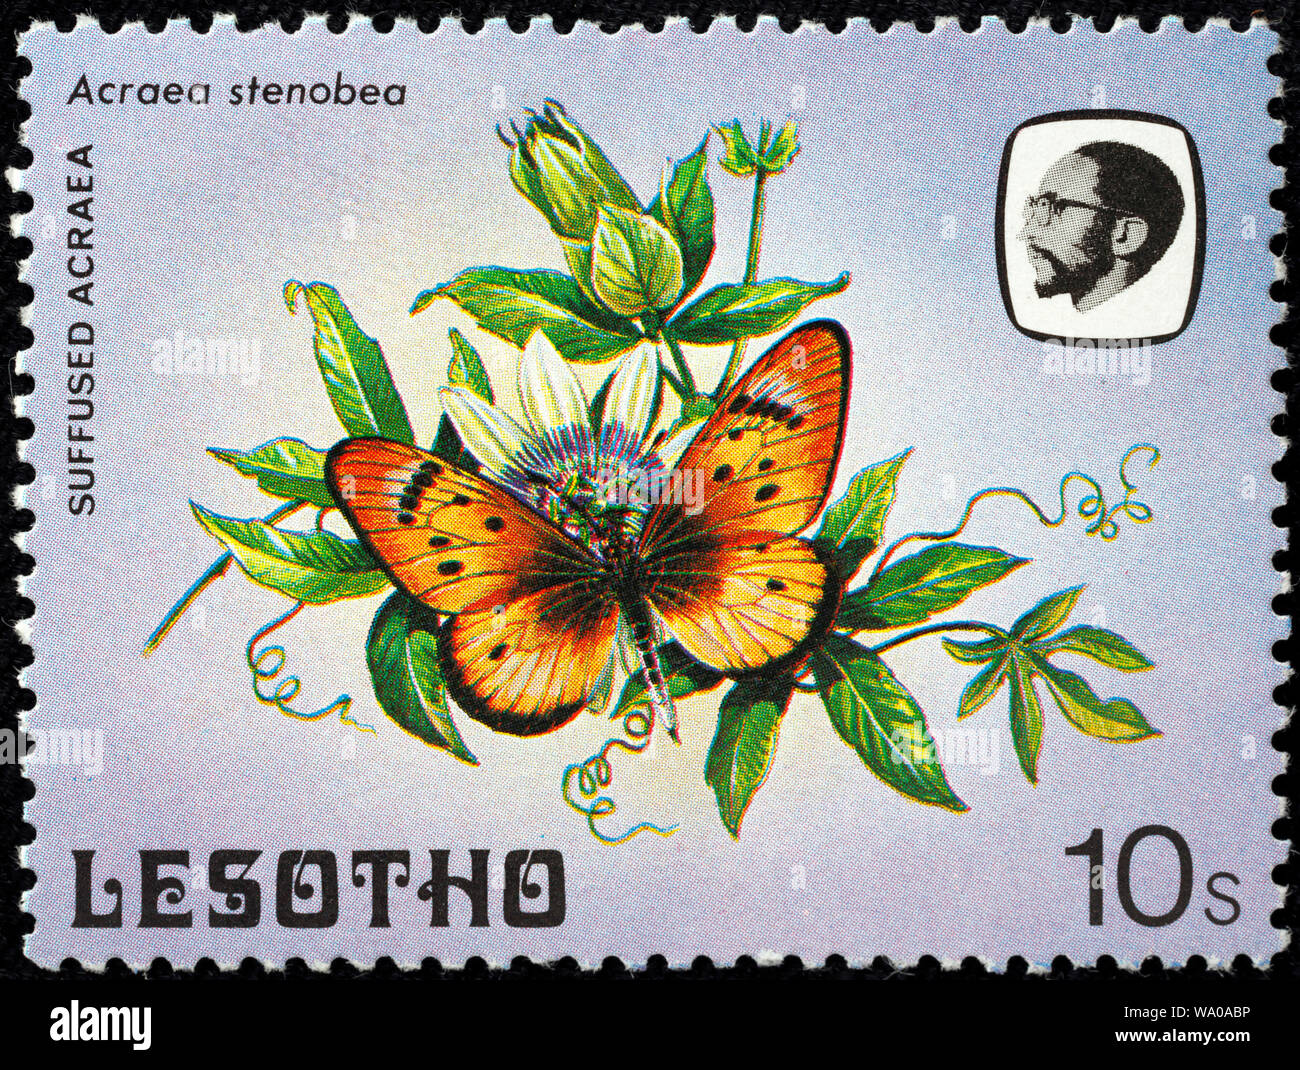 Suffused acraea, Acraea stenobea, postage stamp, Lesotho, 1984 Stock Photo